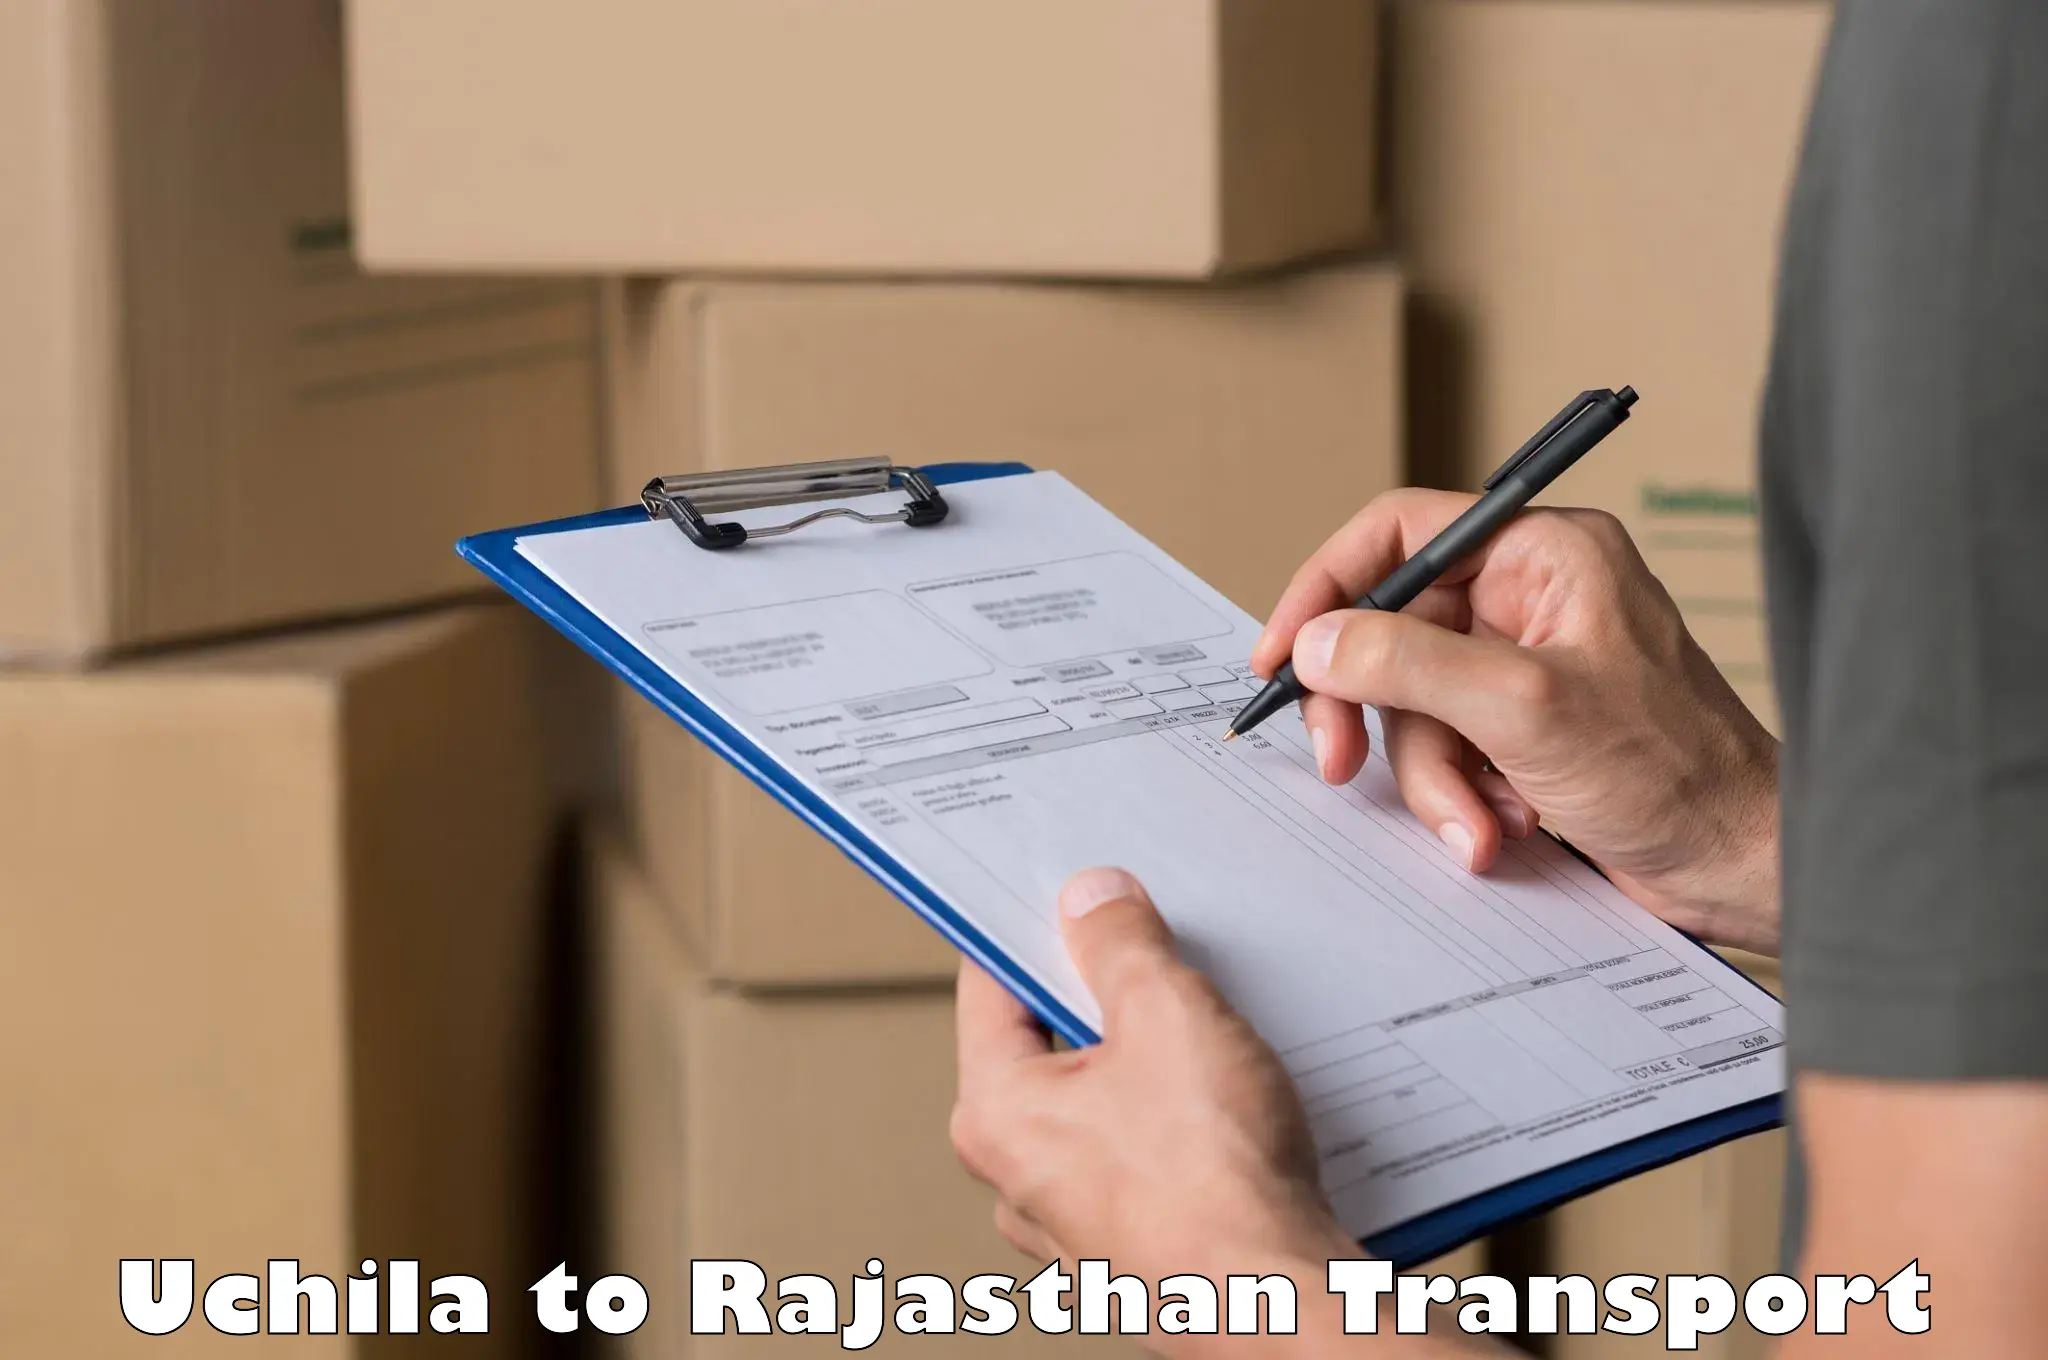 India truck logistics services Uchila to Jaipur